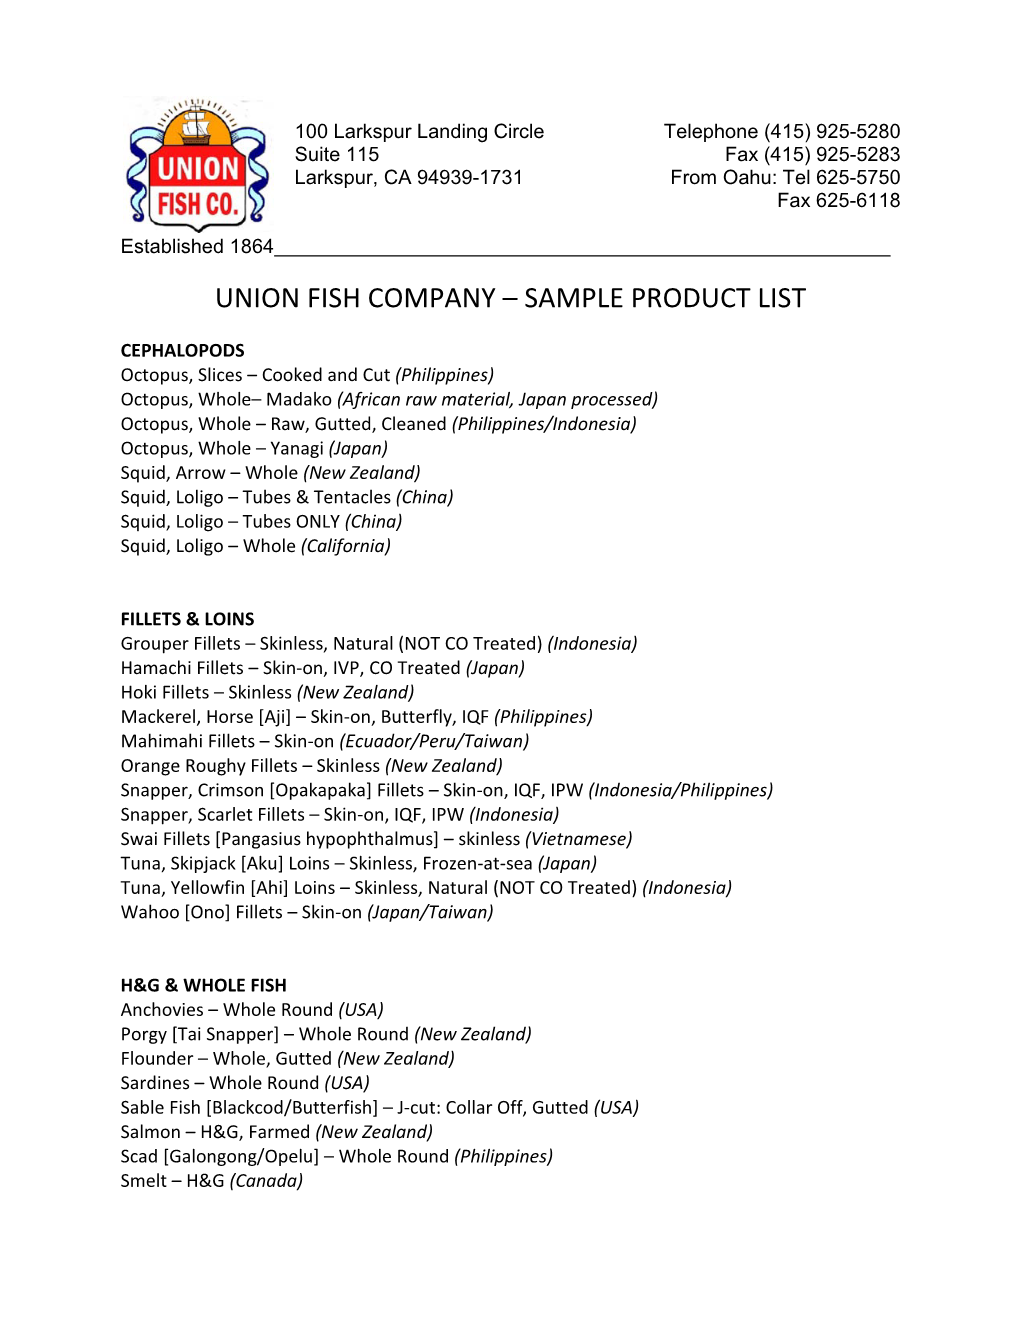 Union Fish Company – Sample Product List